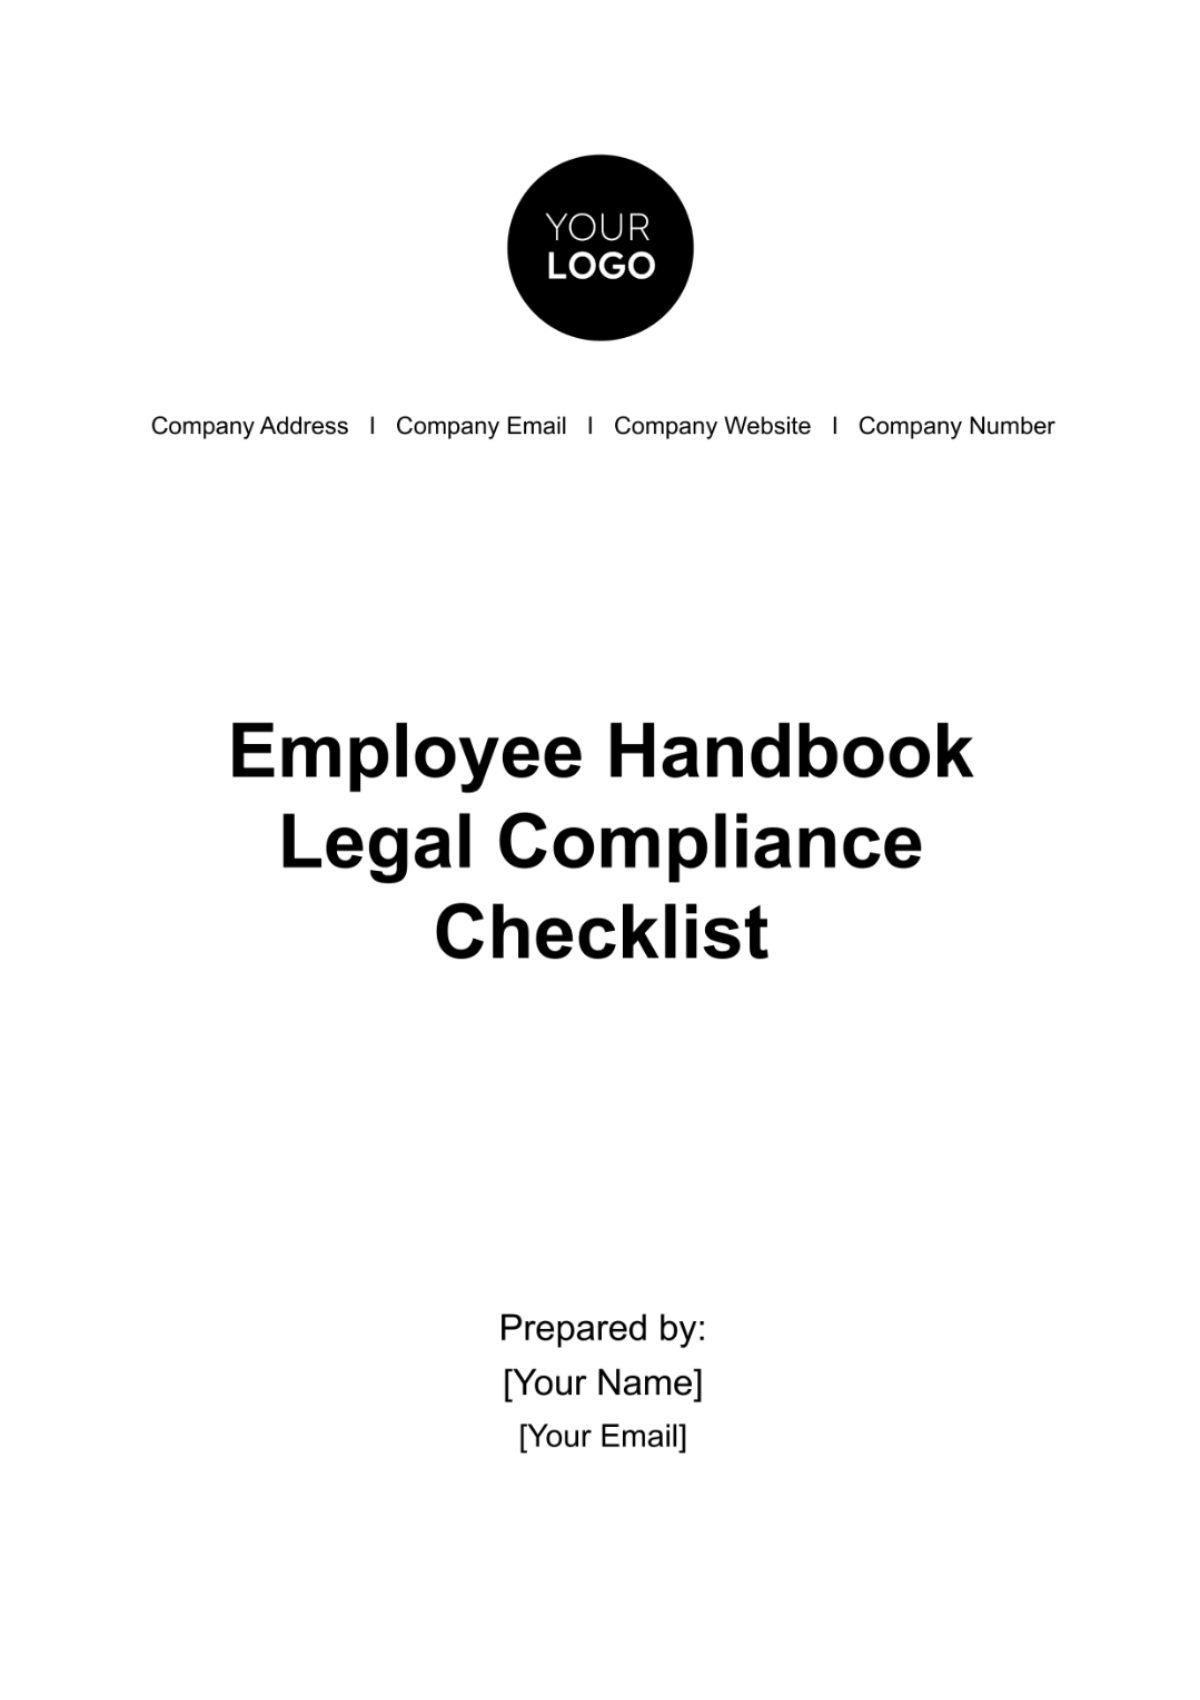 Free Employee Handbook Legal Compliance Checklist HR Template